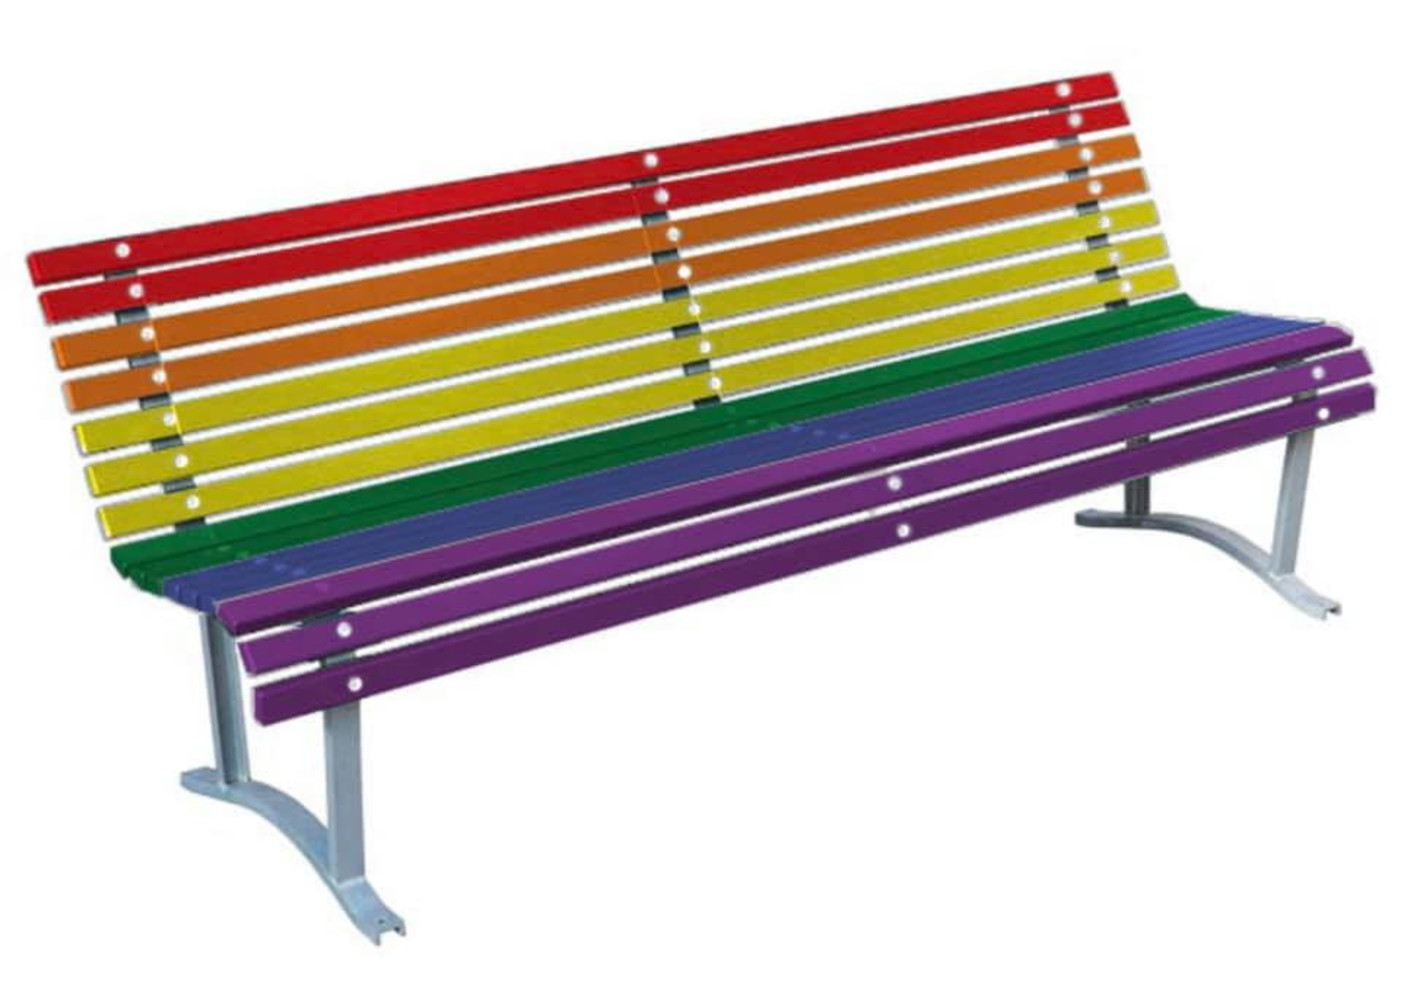 panchine-contro-omofobia-milano-arcobaleno